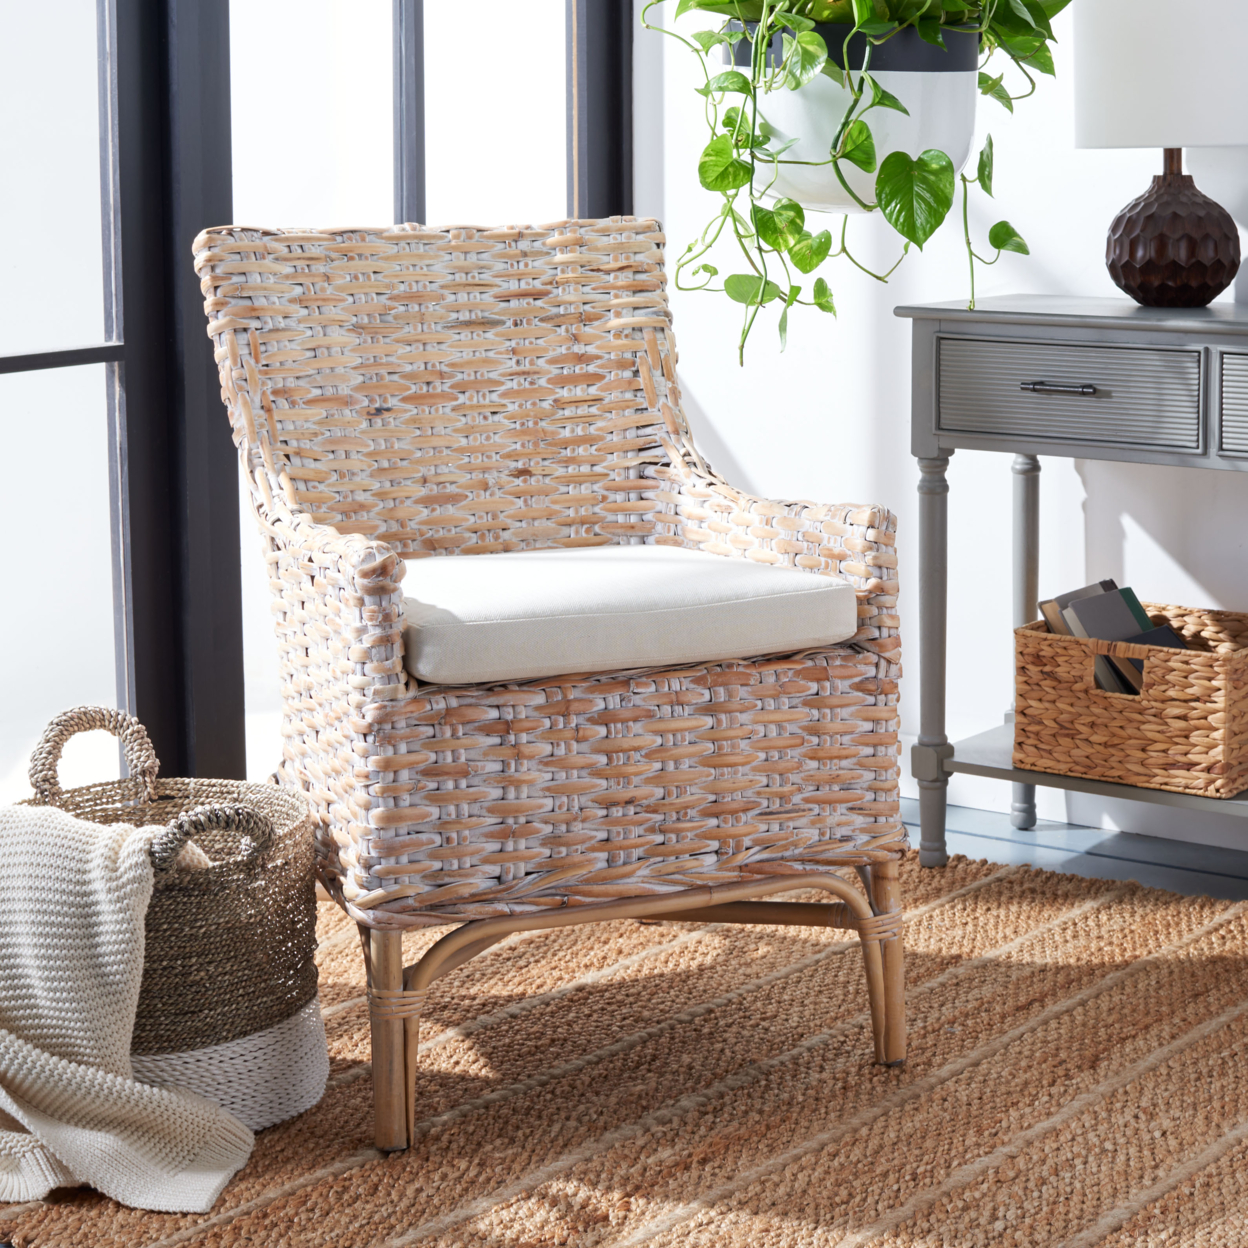 SAFAVIEH Cristen Rattan Accent Chair With Cushion Natural White Wash / White